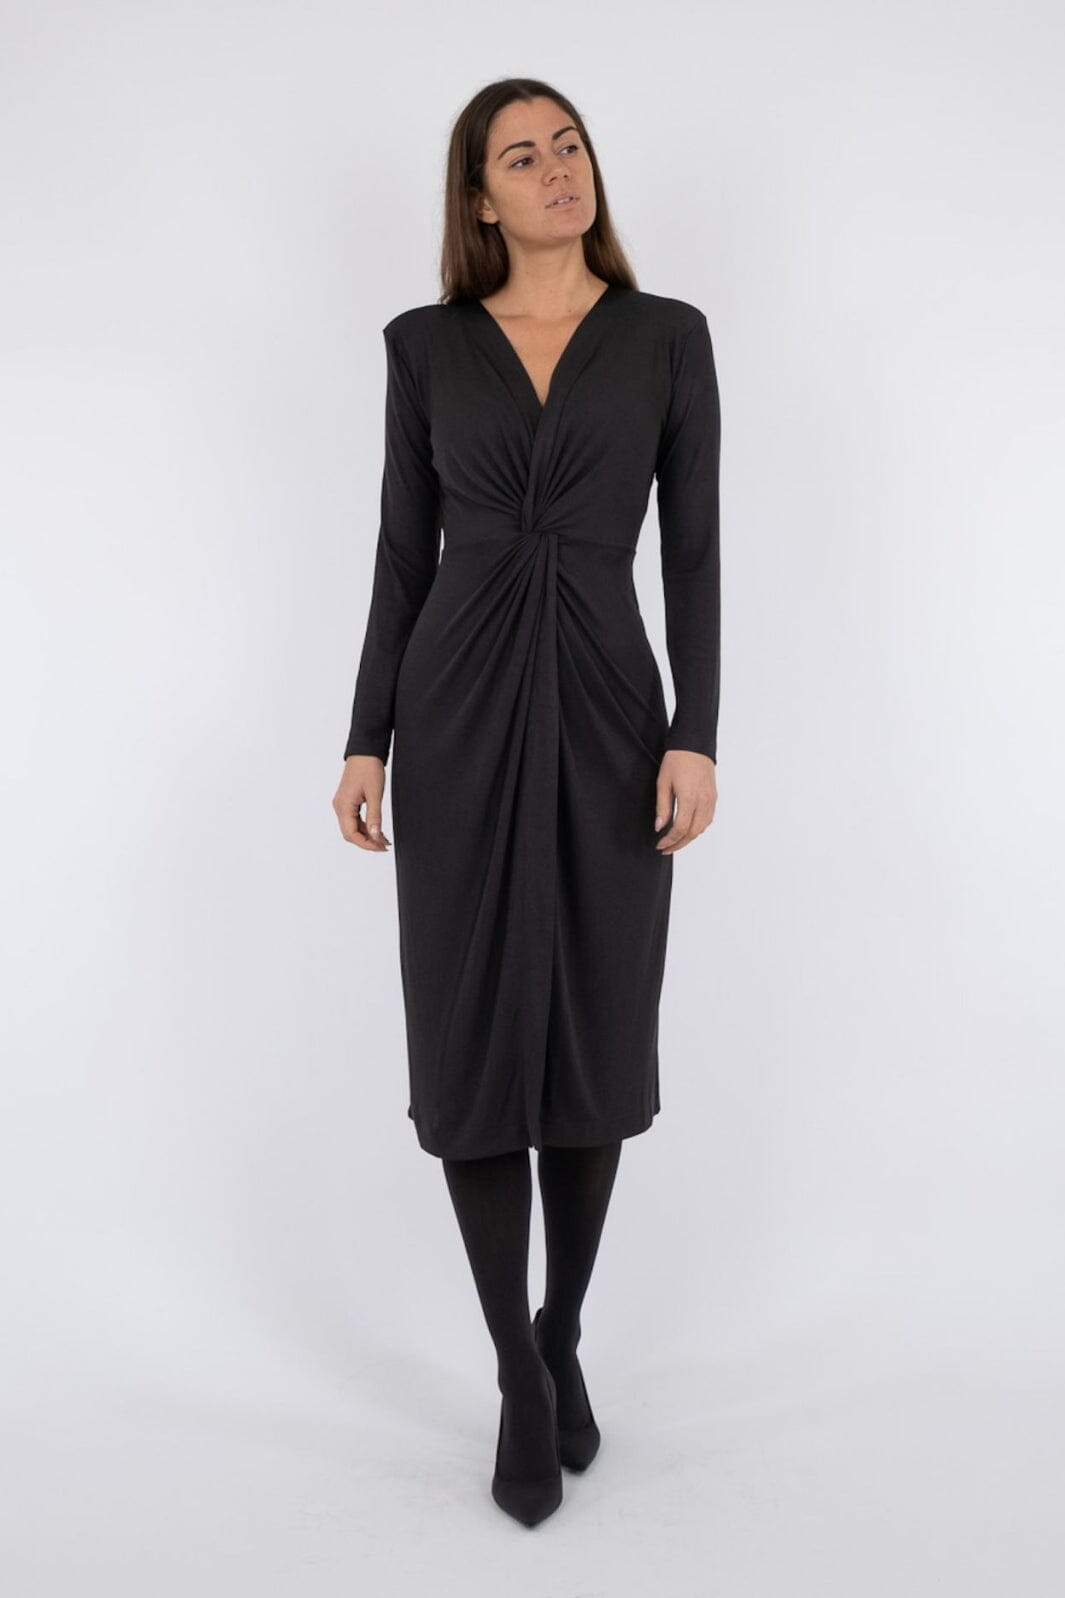 Neo Noir - Ginnie Dress - Black Kjoler 